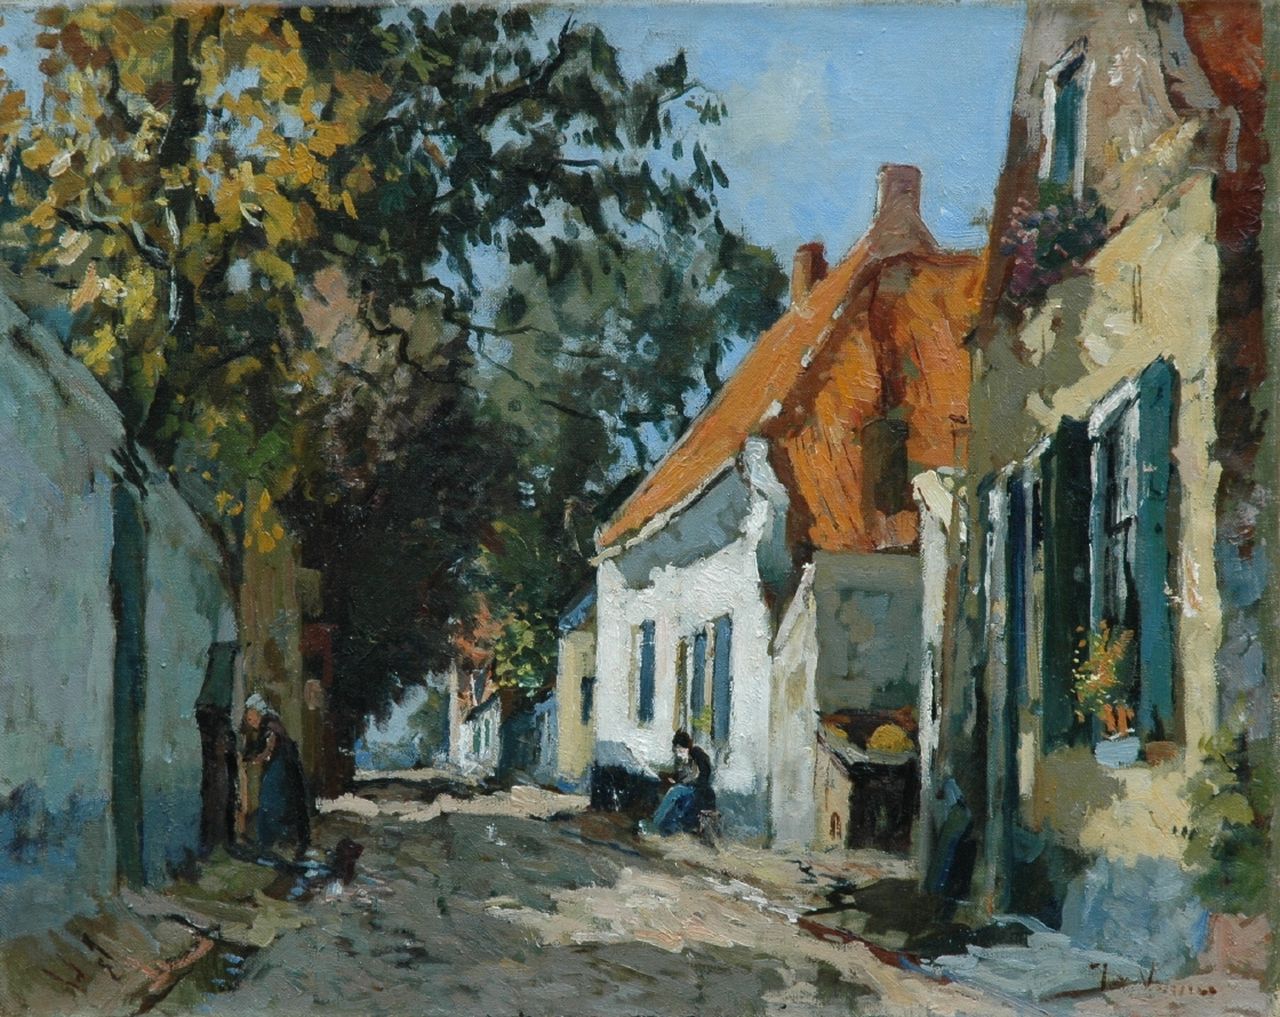 Vuuren J. van | Jan van Vuuren, A sunlit street, Elburg, Öl auf Leinwand 40,2 x 50,2 cm, signed l.r.